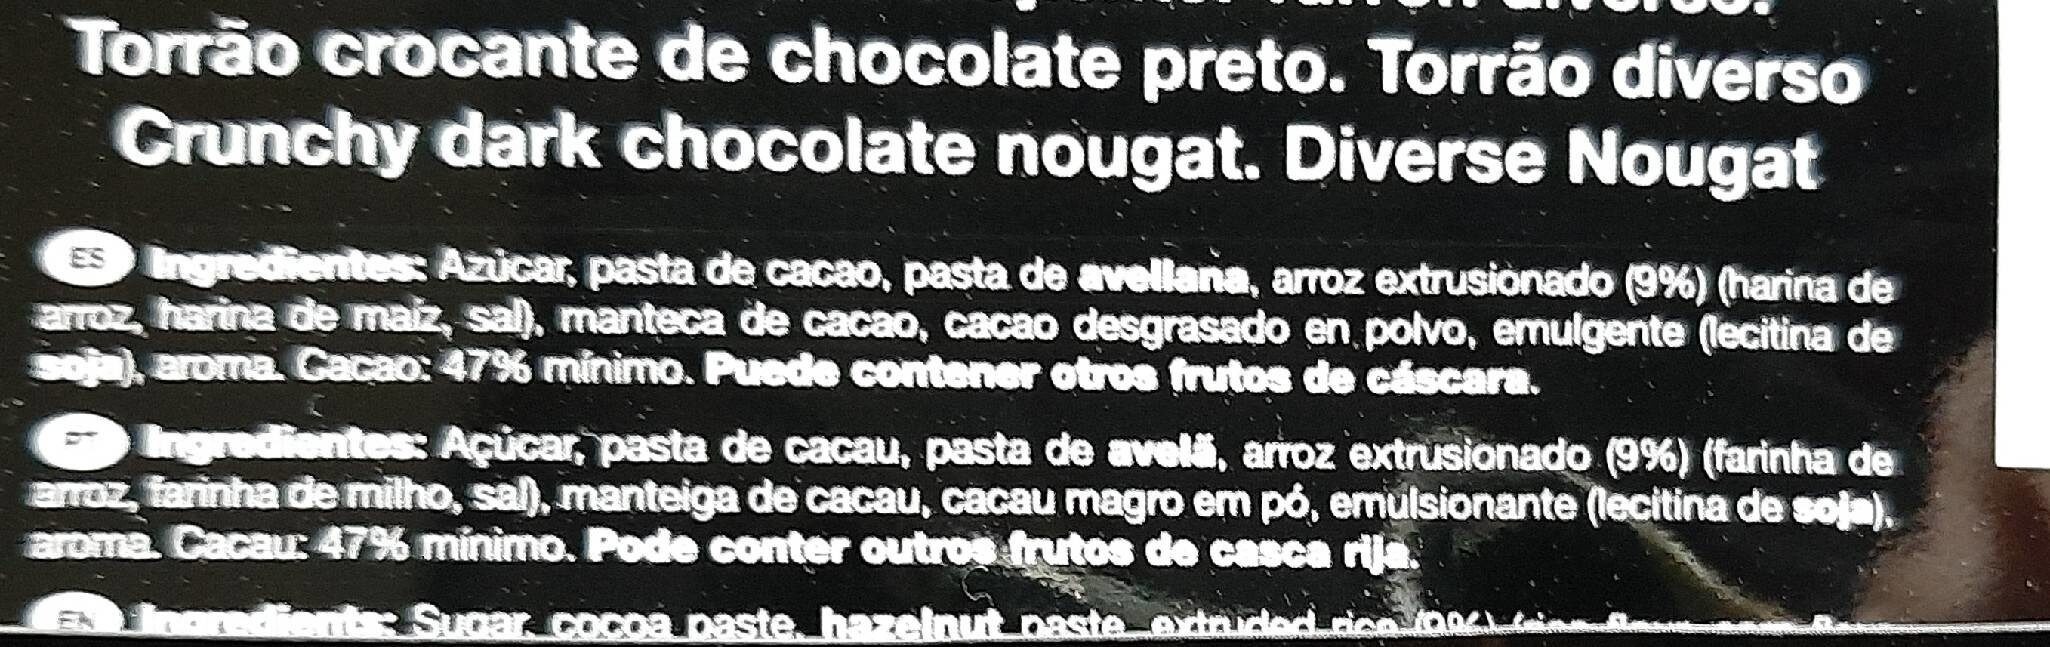 Turròn de chocolate negro crujiente - Ingredients - es